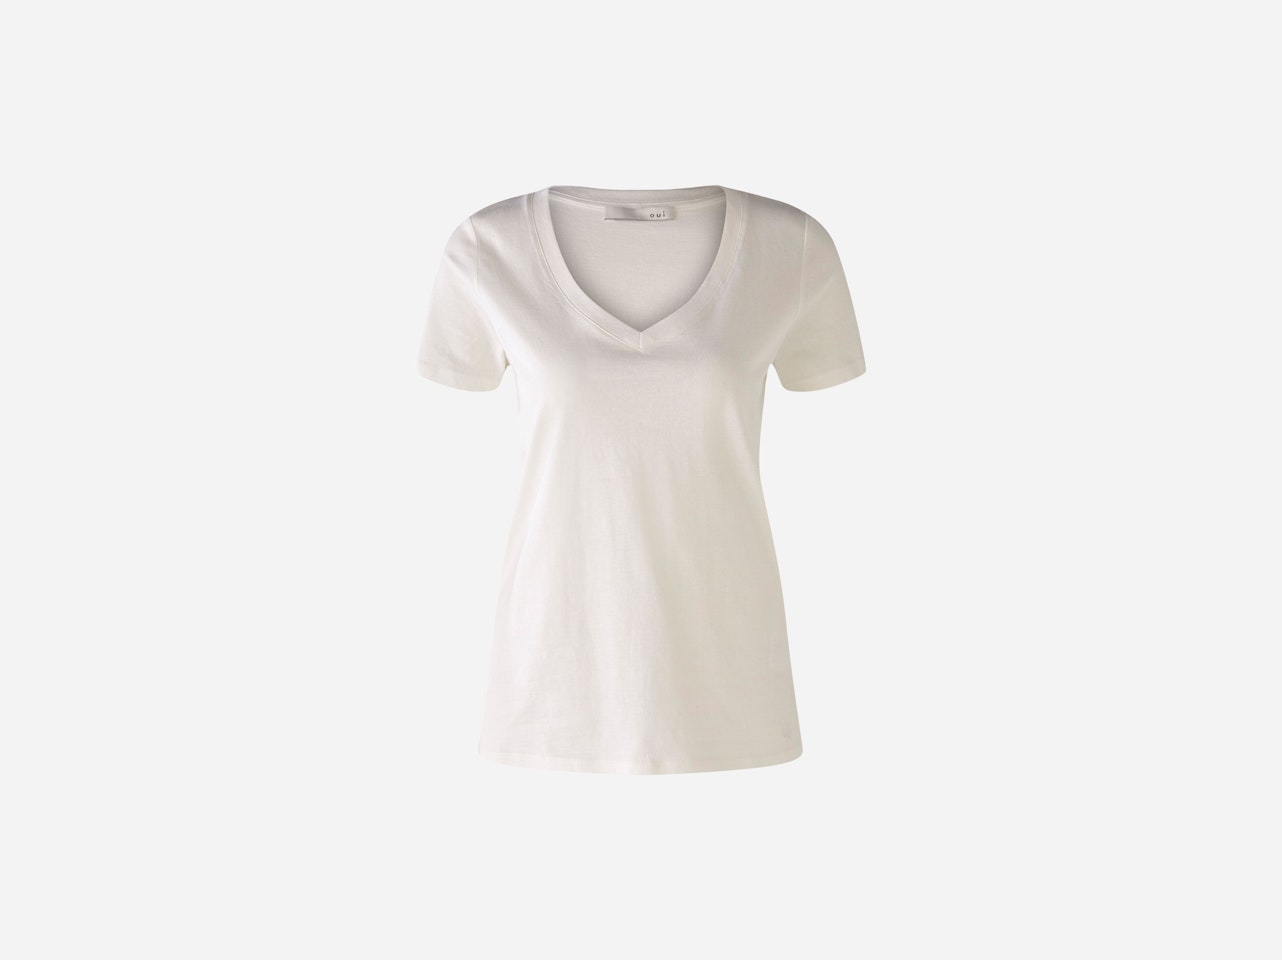 Bild 5 von CARLI T-shirt 100% organic cotton in cloud dancer | Oui